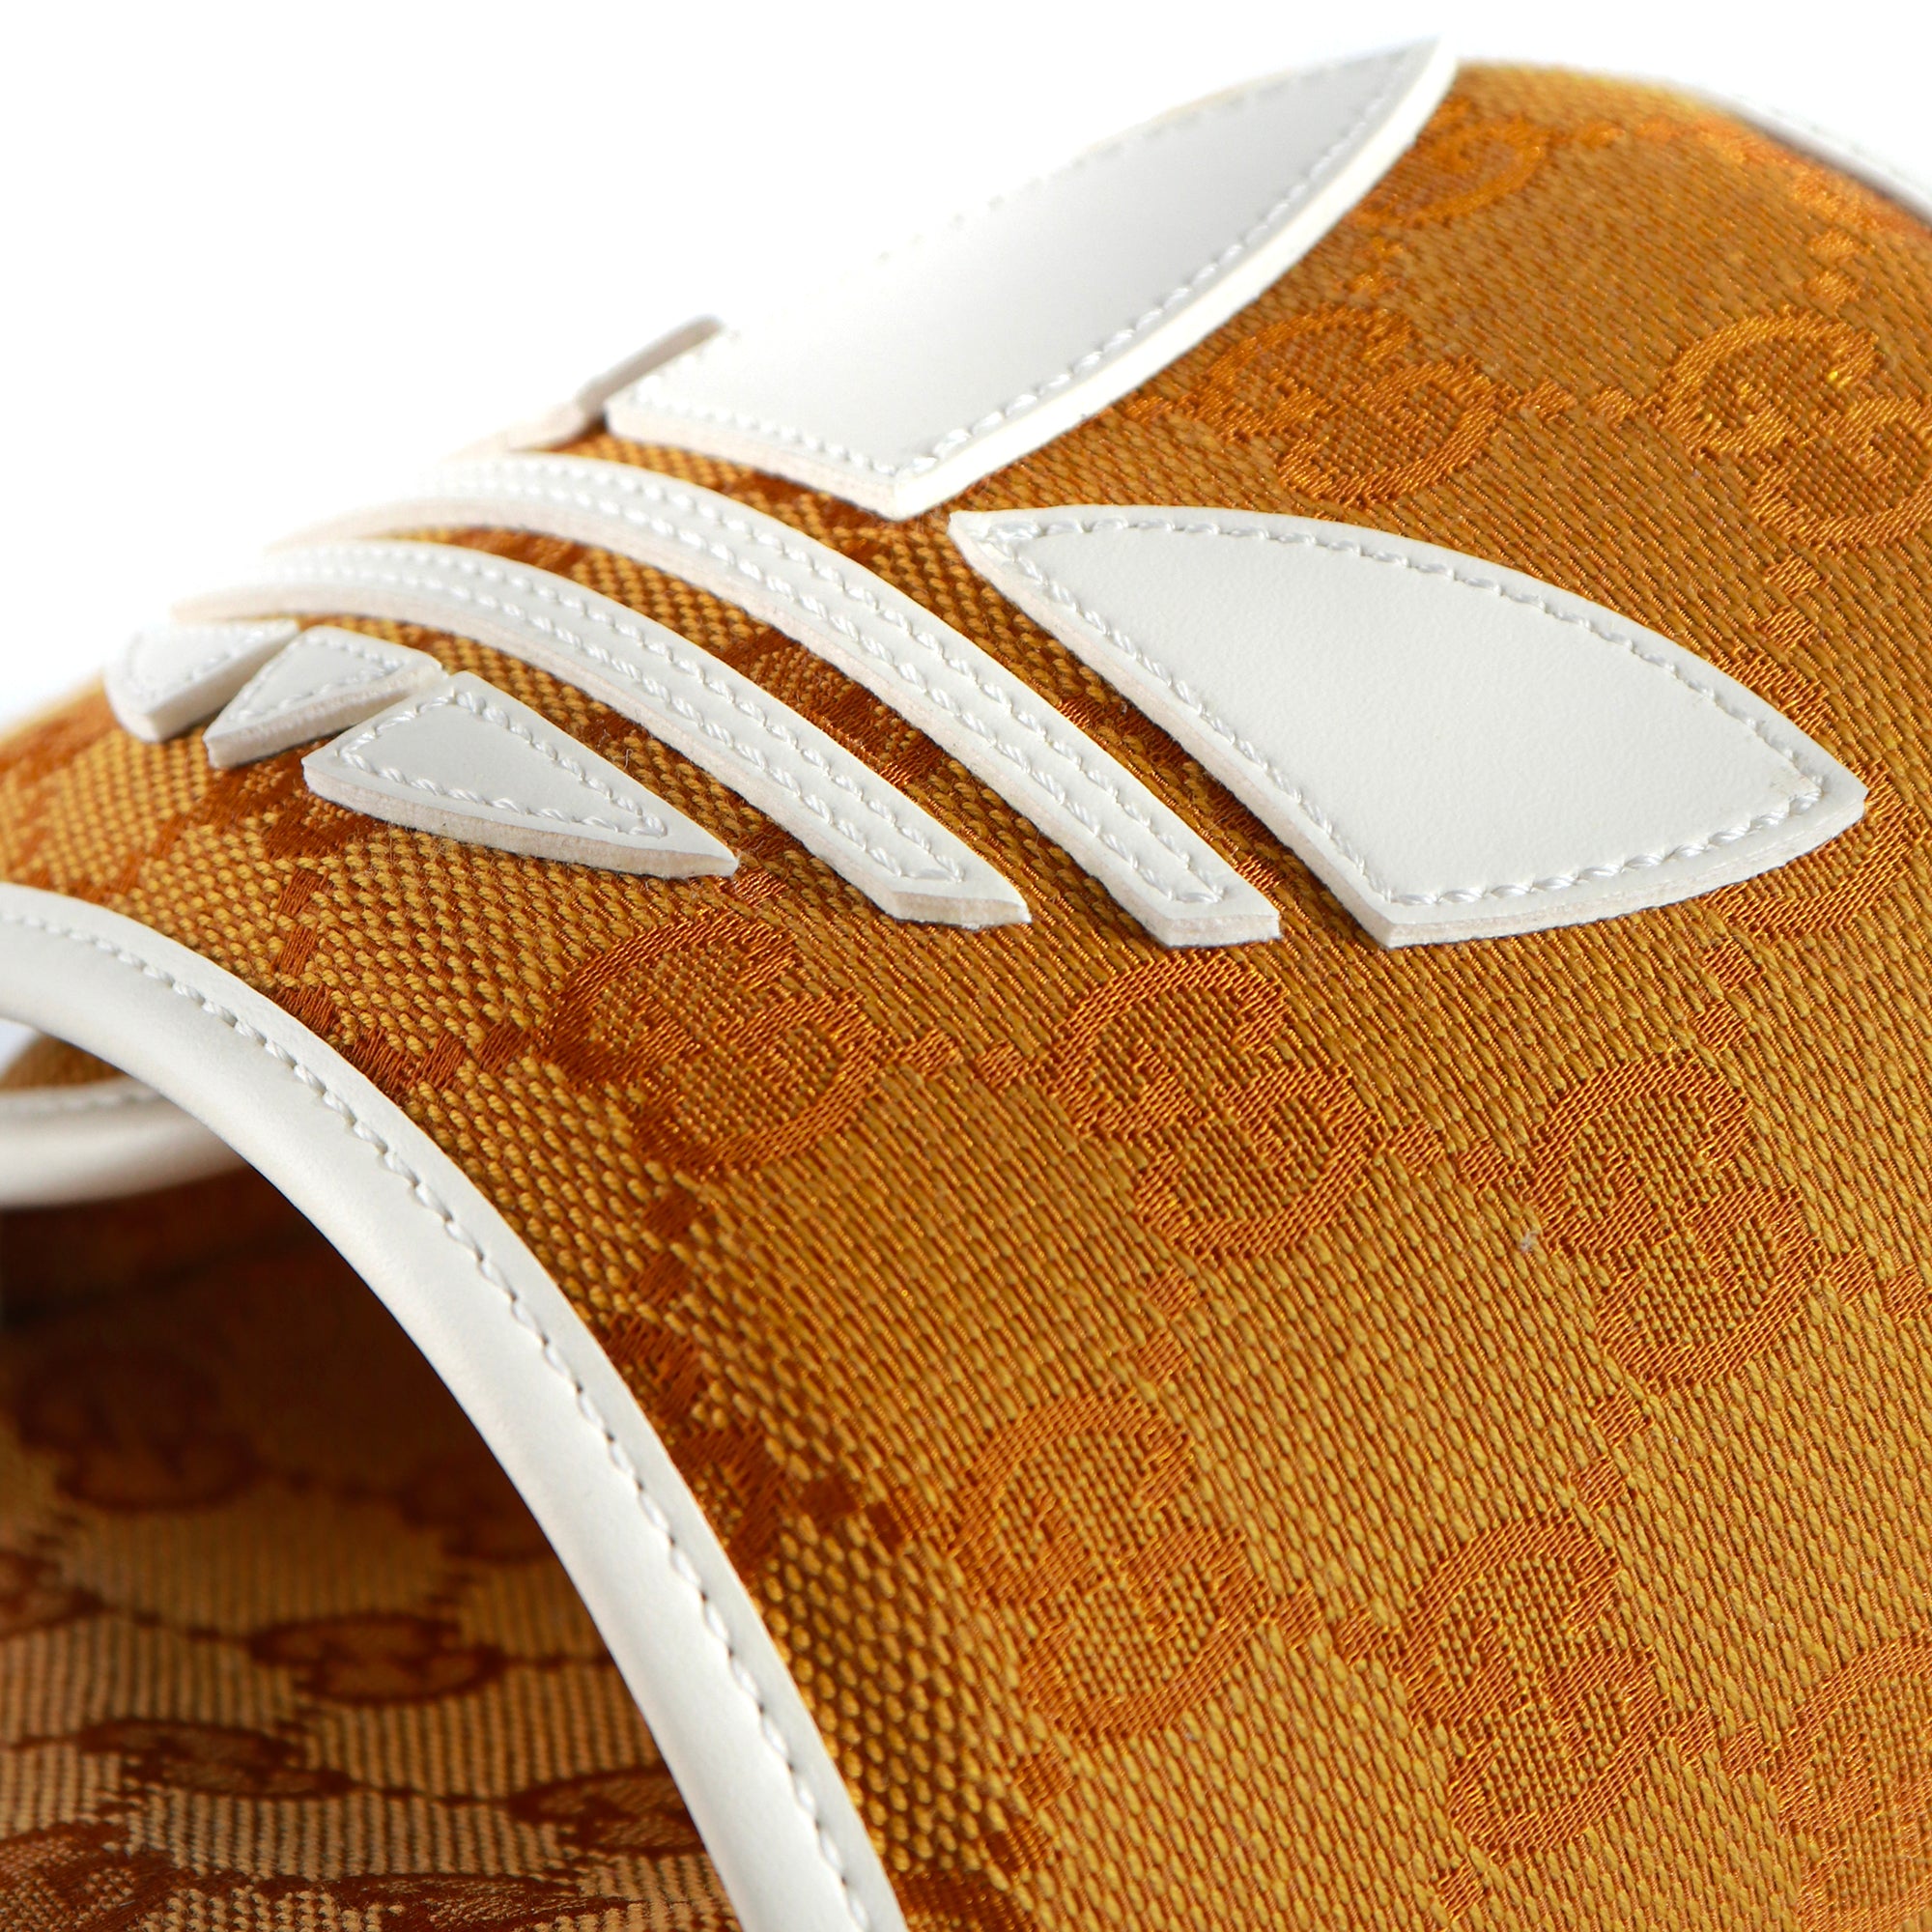 GUCCI - Sandales monogrammées Gucci x Adidas (T45)